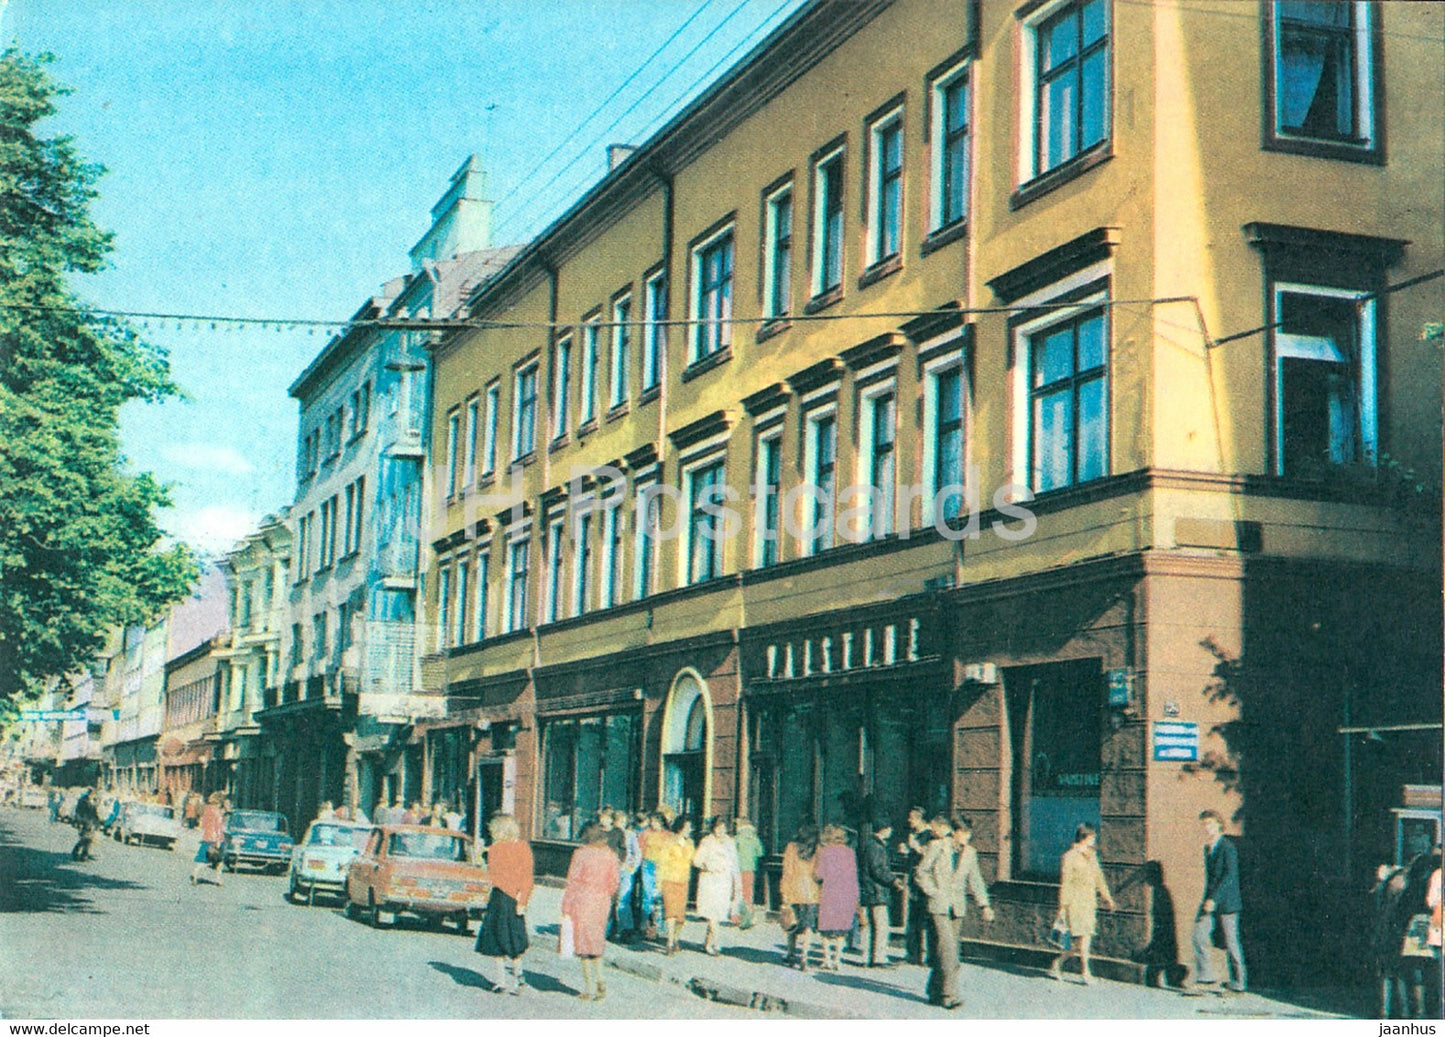 Kaunas - Laisves Avenue - car Moskvich - Lithuania USSR - unused - JH Postcards